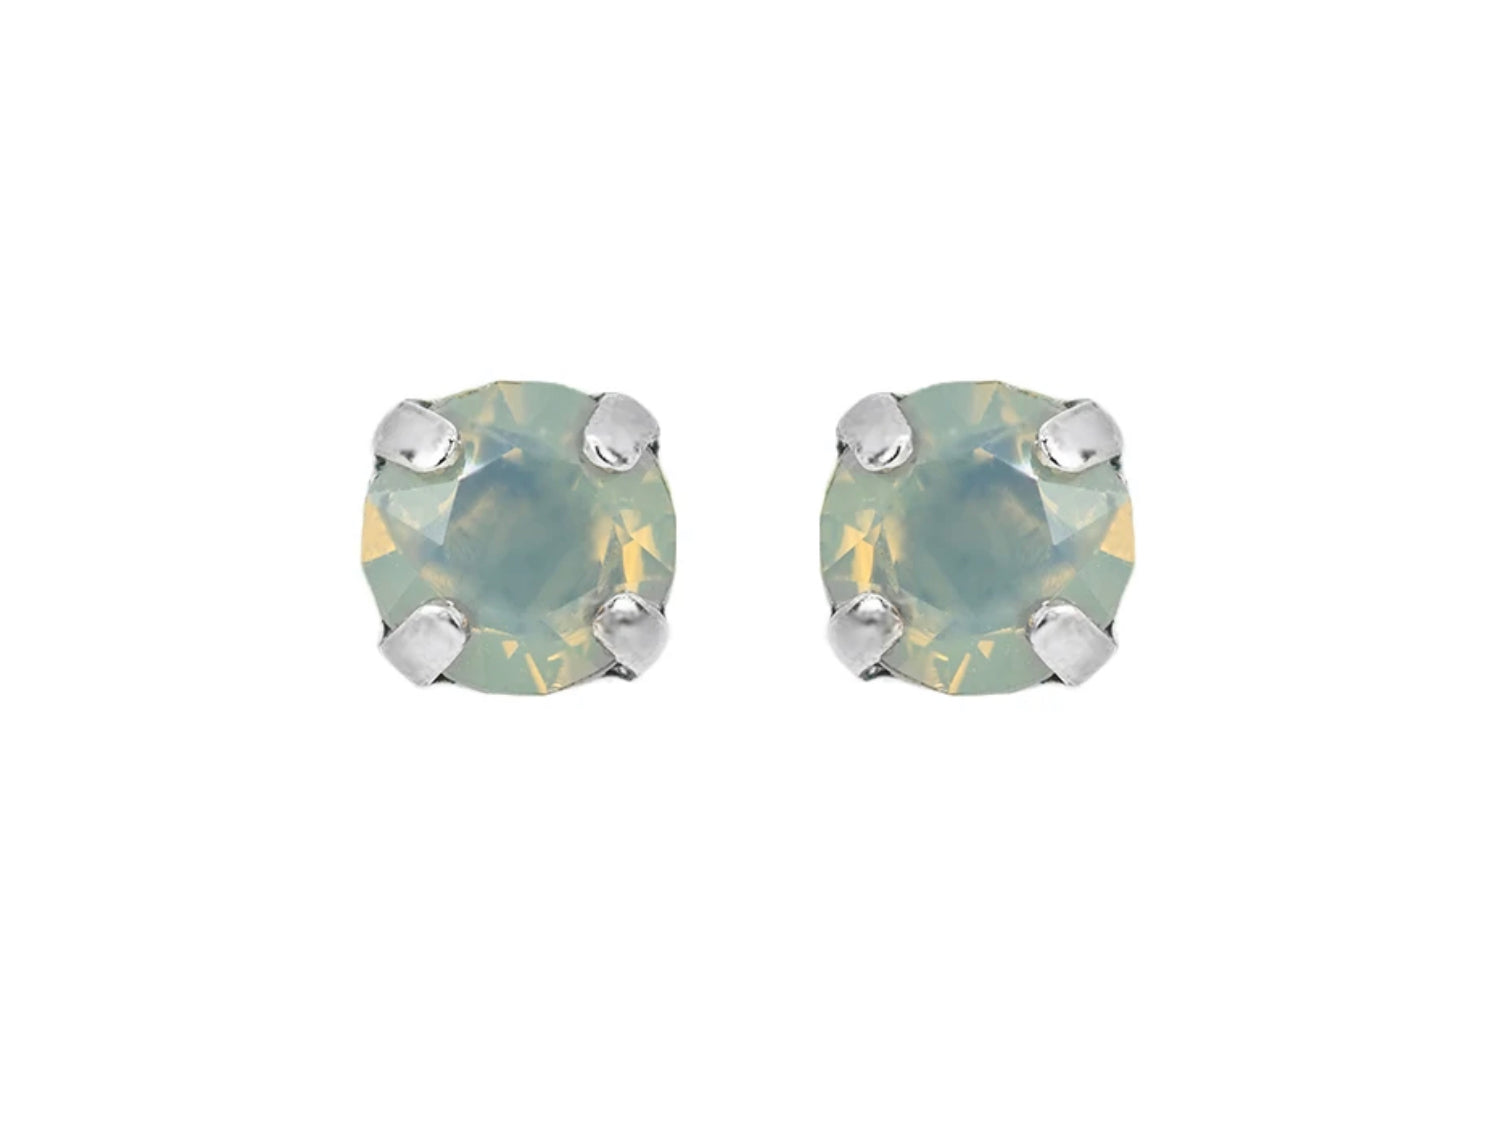 Mariana Silver Large Single Stone Post Earrings in "White Opal"